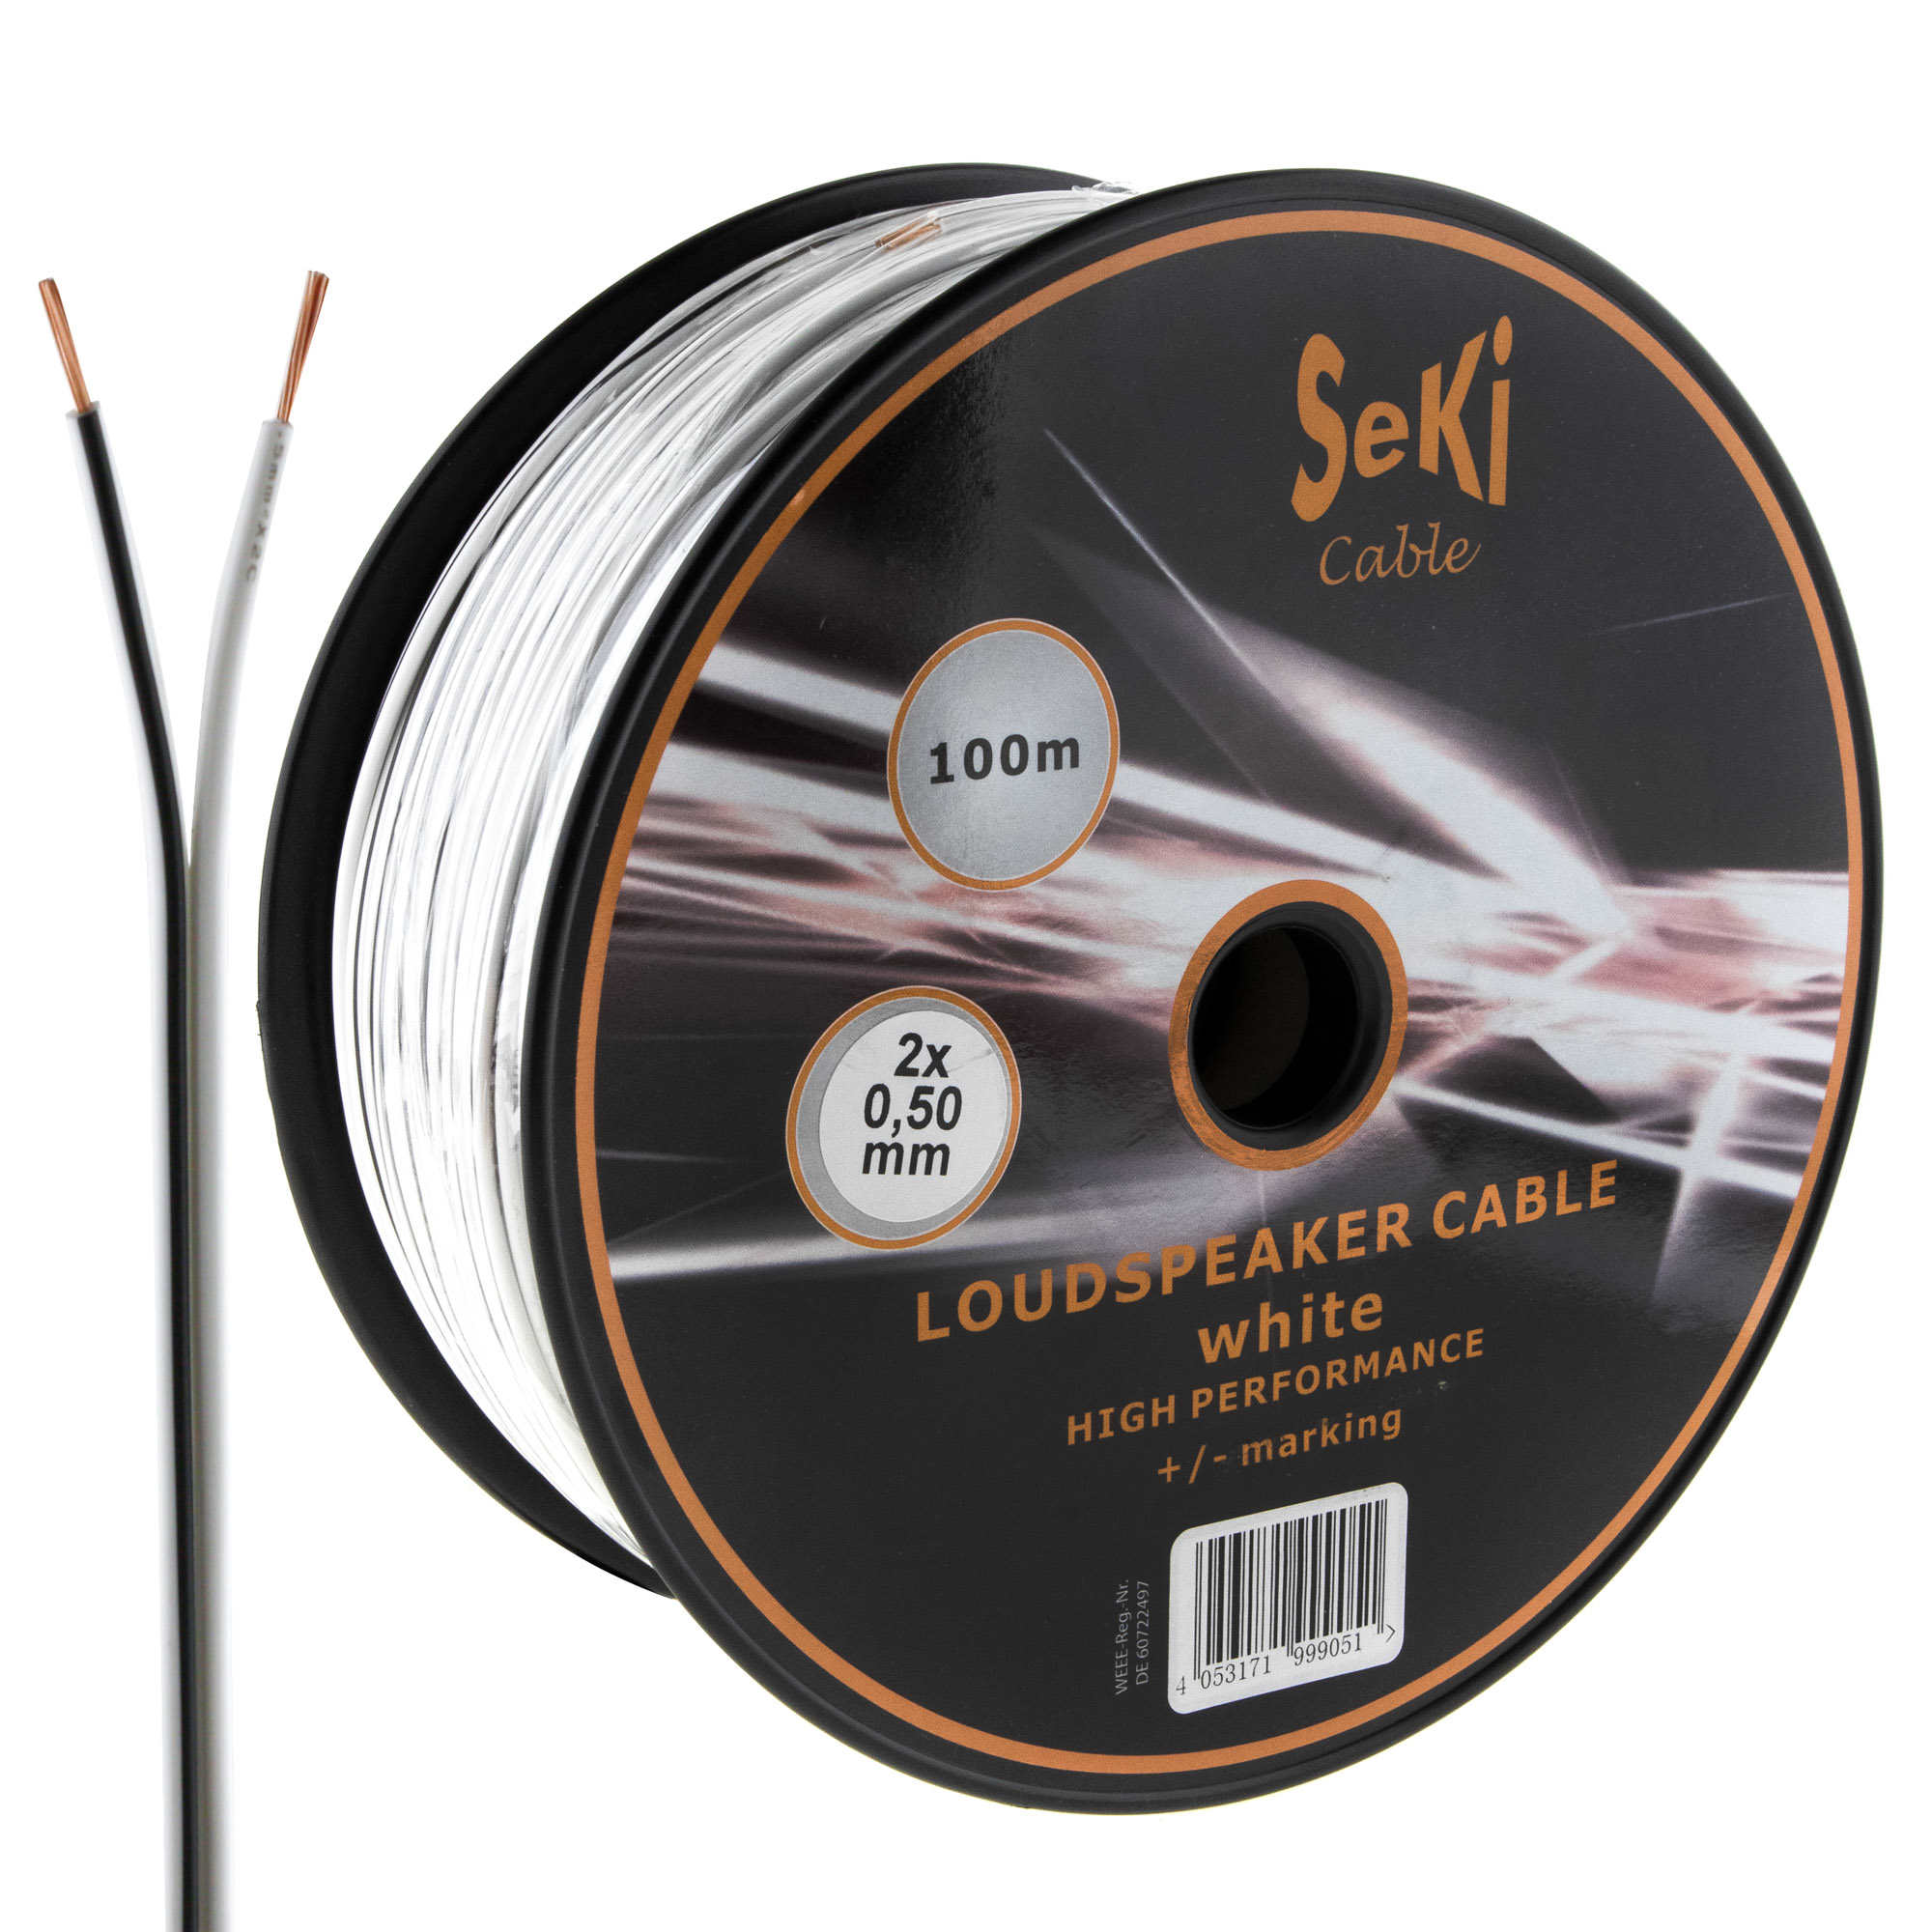 Loudspeaker cable white 100m 0.50mm